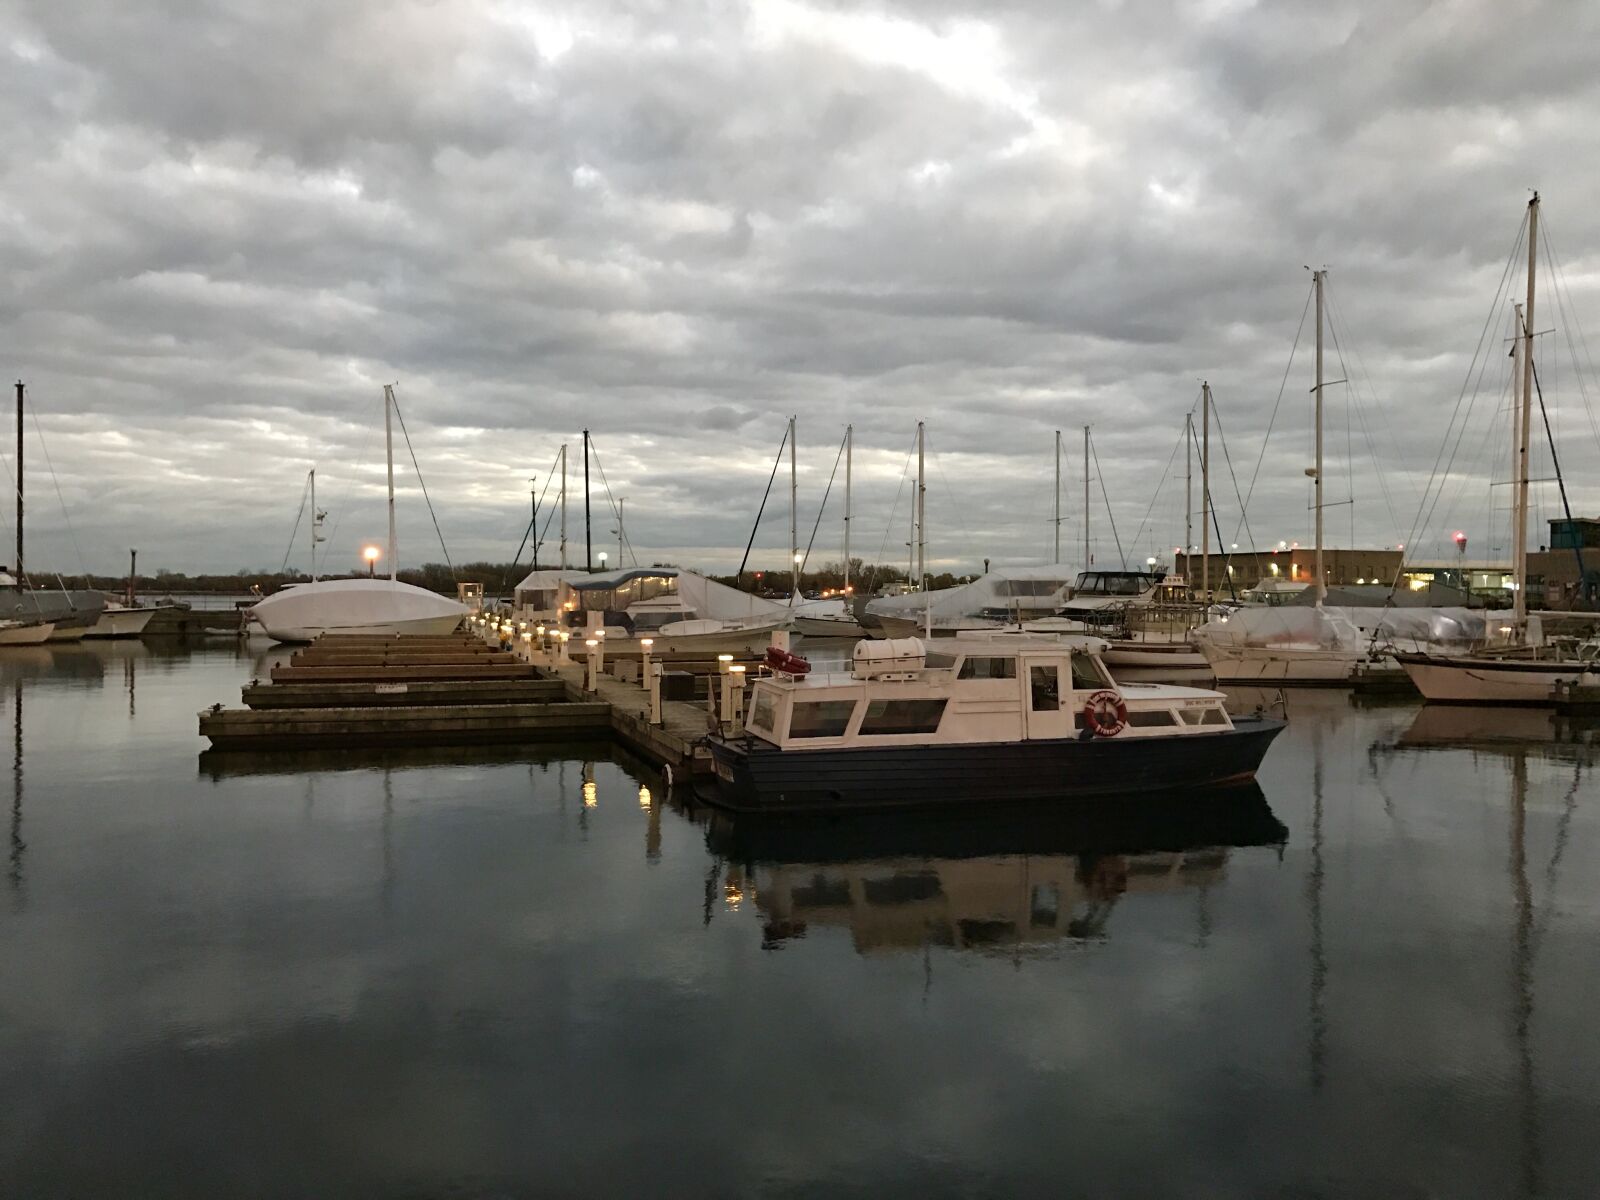 iPhone 7 Plus back iSight Duo camera 3.99mm f/1.8 sample photo. Boats, dock, lake photography